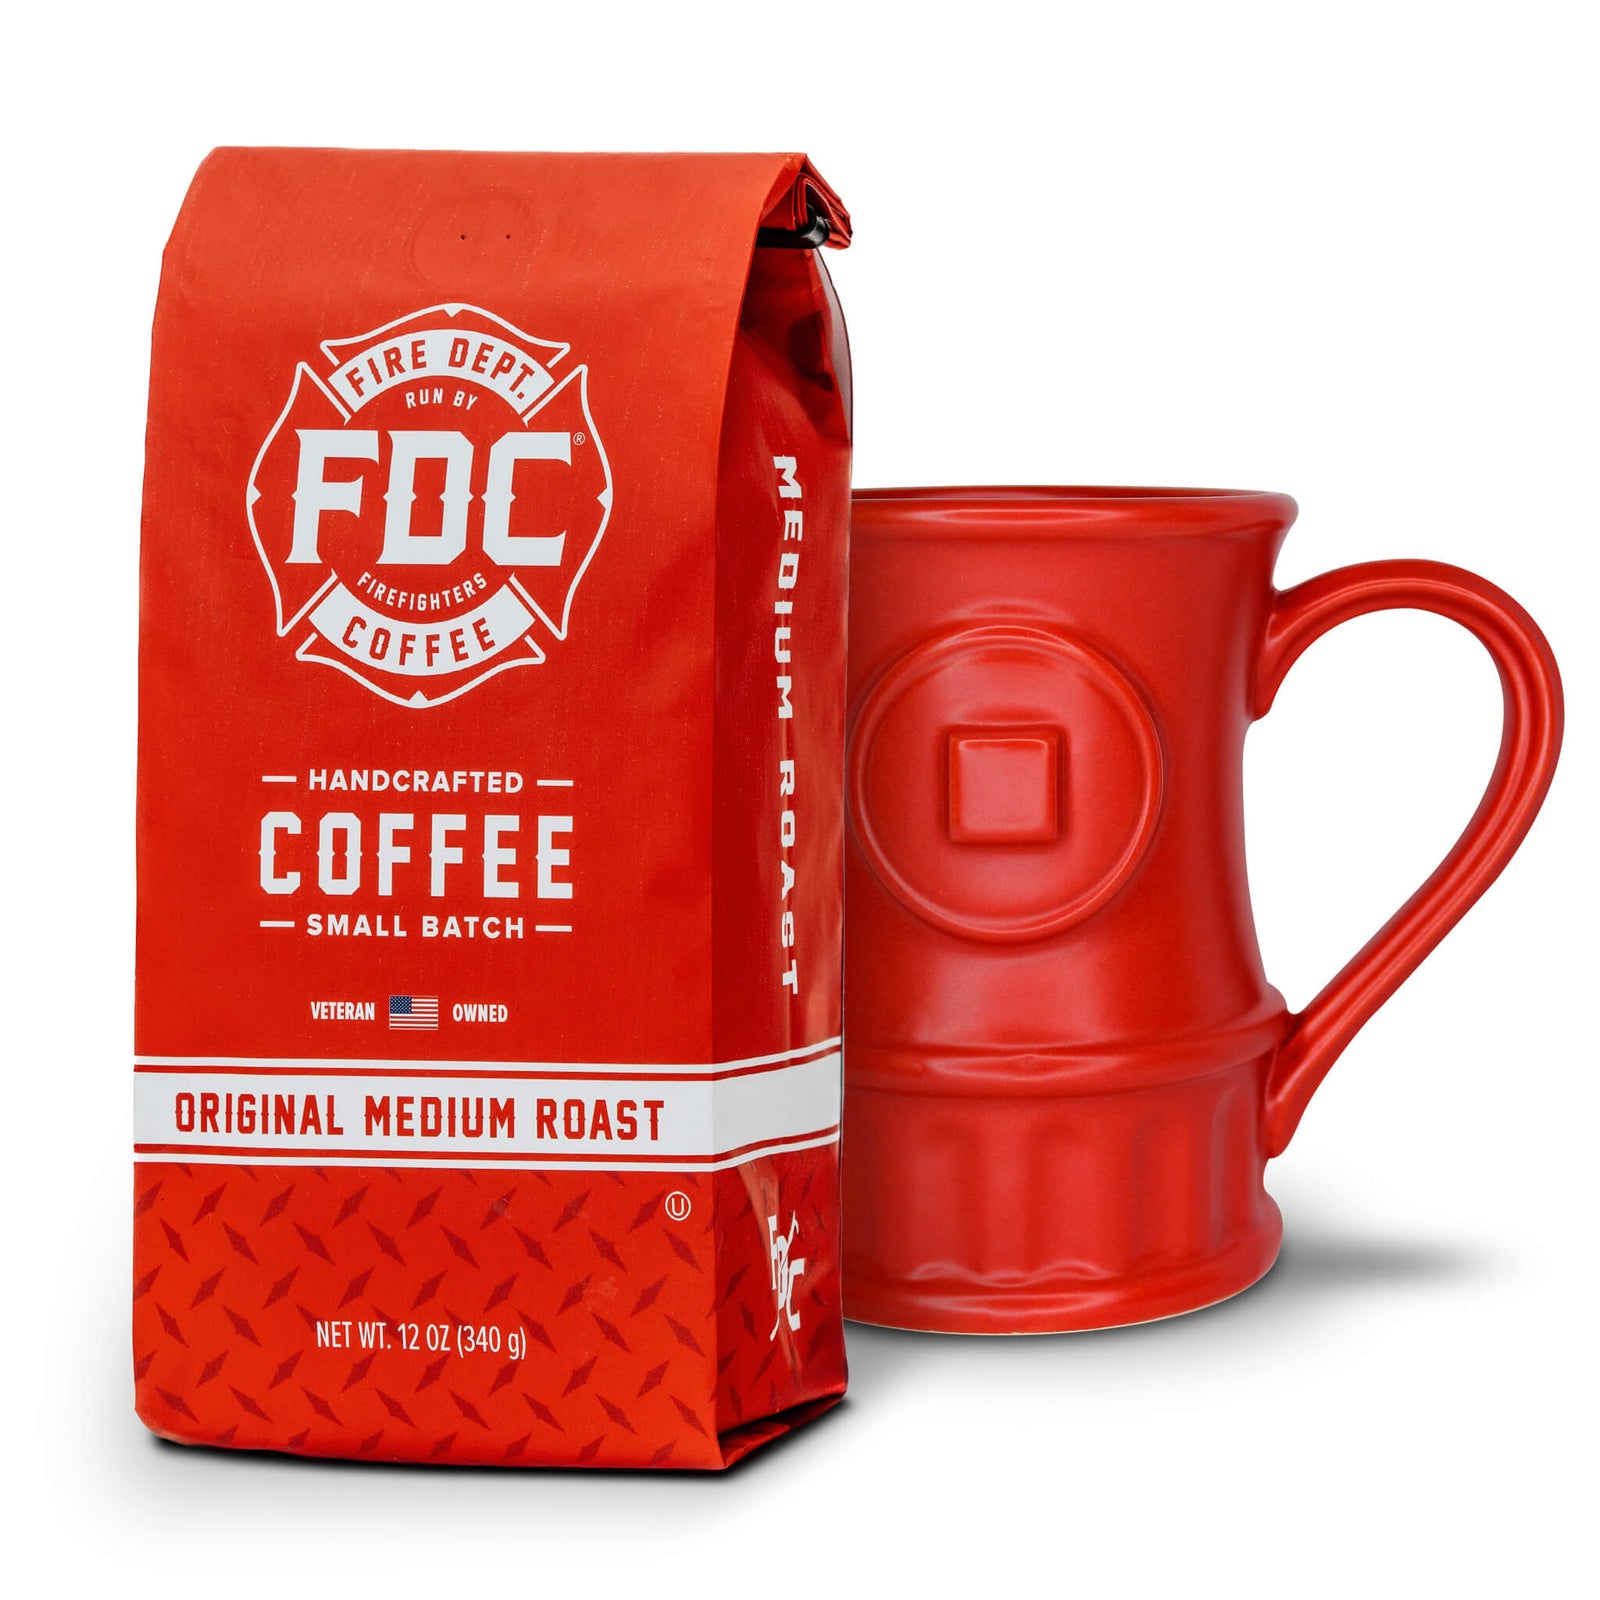 A 12 ounce bag of Original Medium Roast Coffee and a red Fire Hydrant Coffee Mug